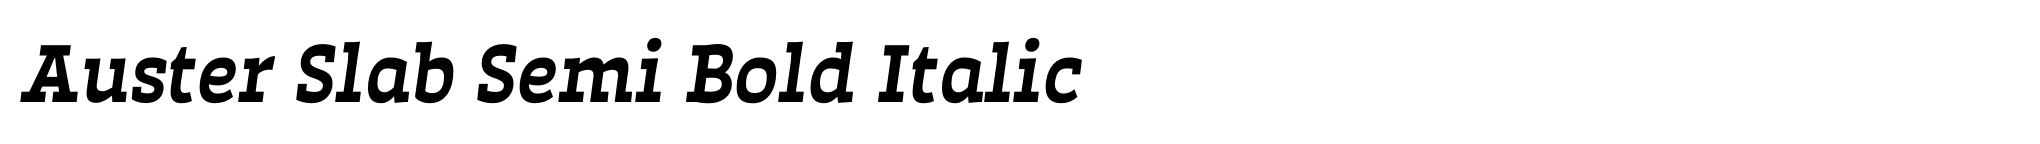 Auster Slab Semi Bold Italic image